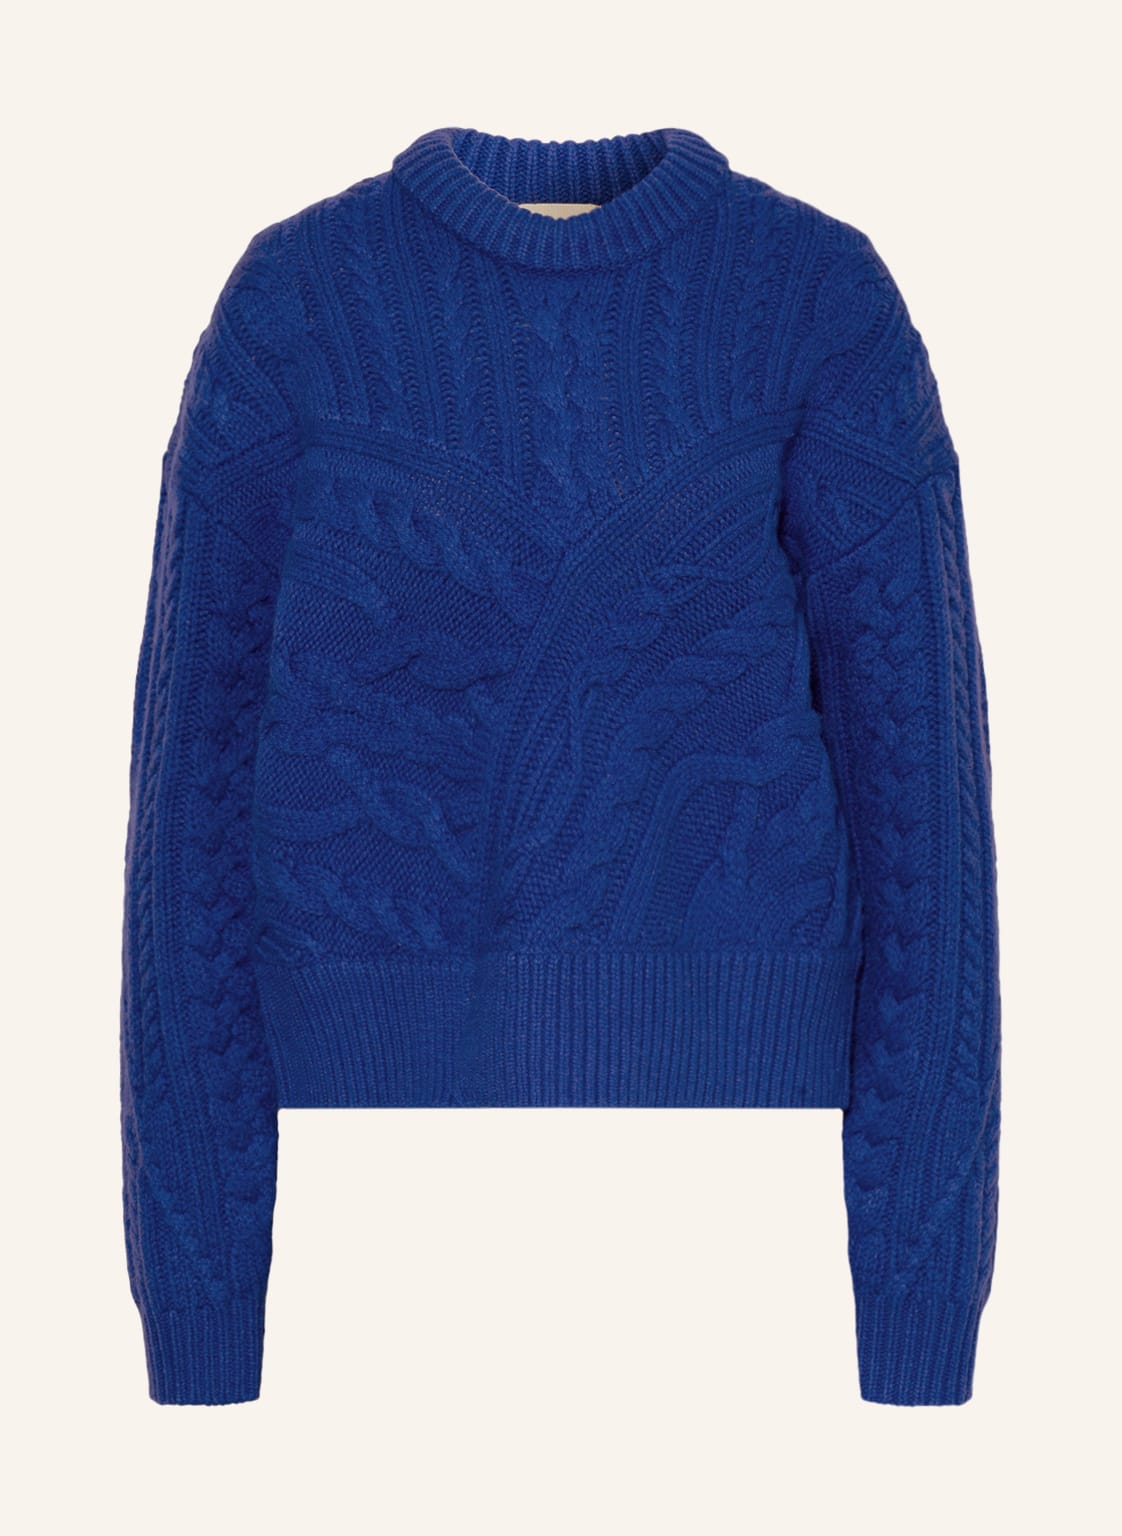 Image of The Garment Pullover Canada blau